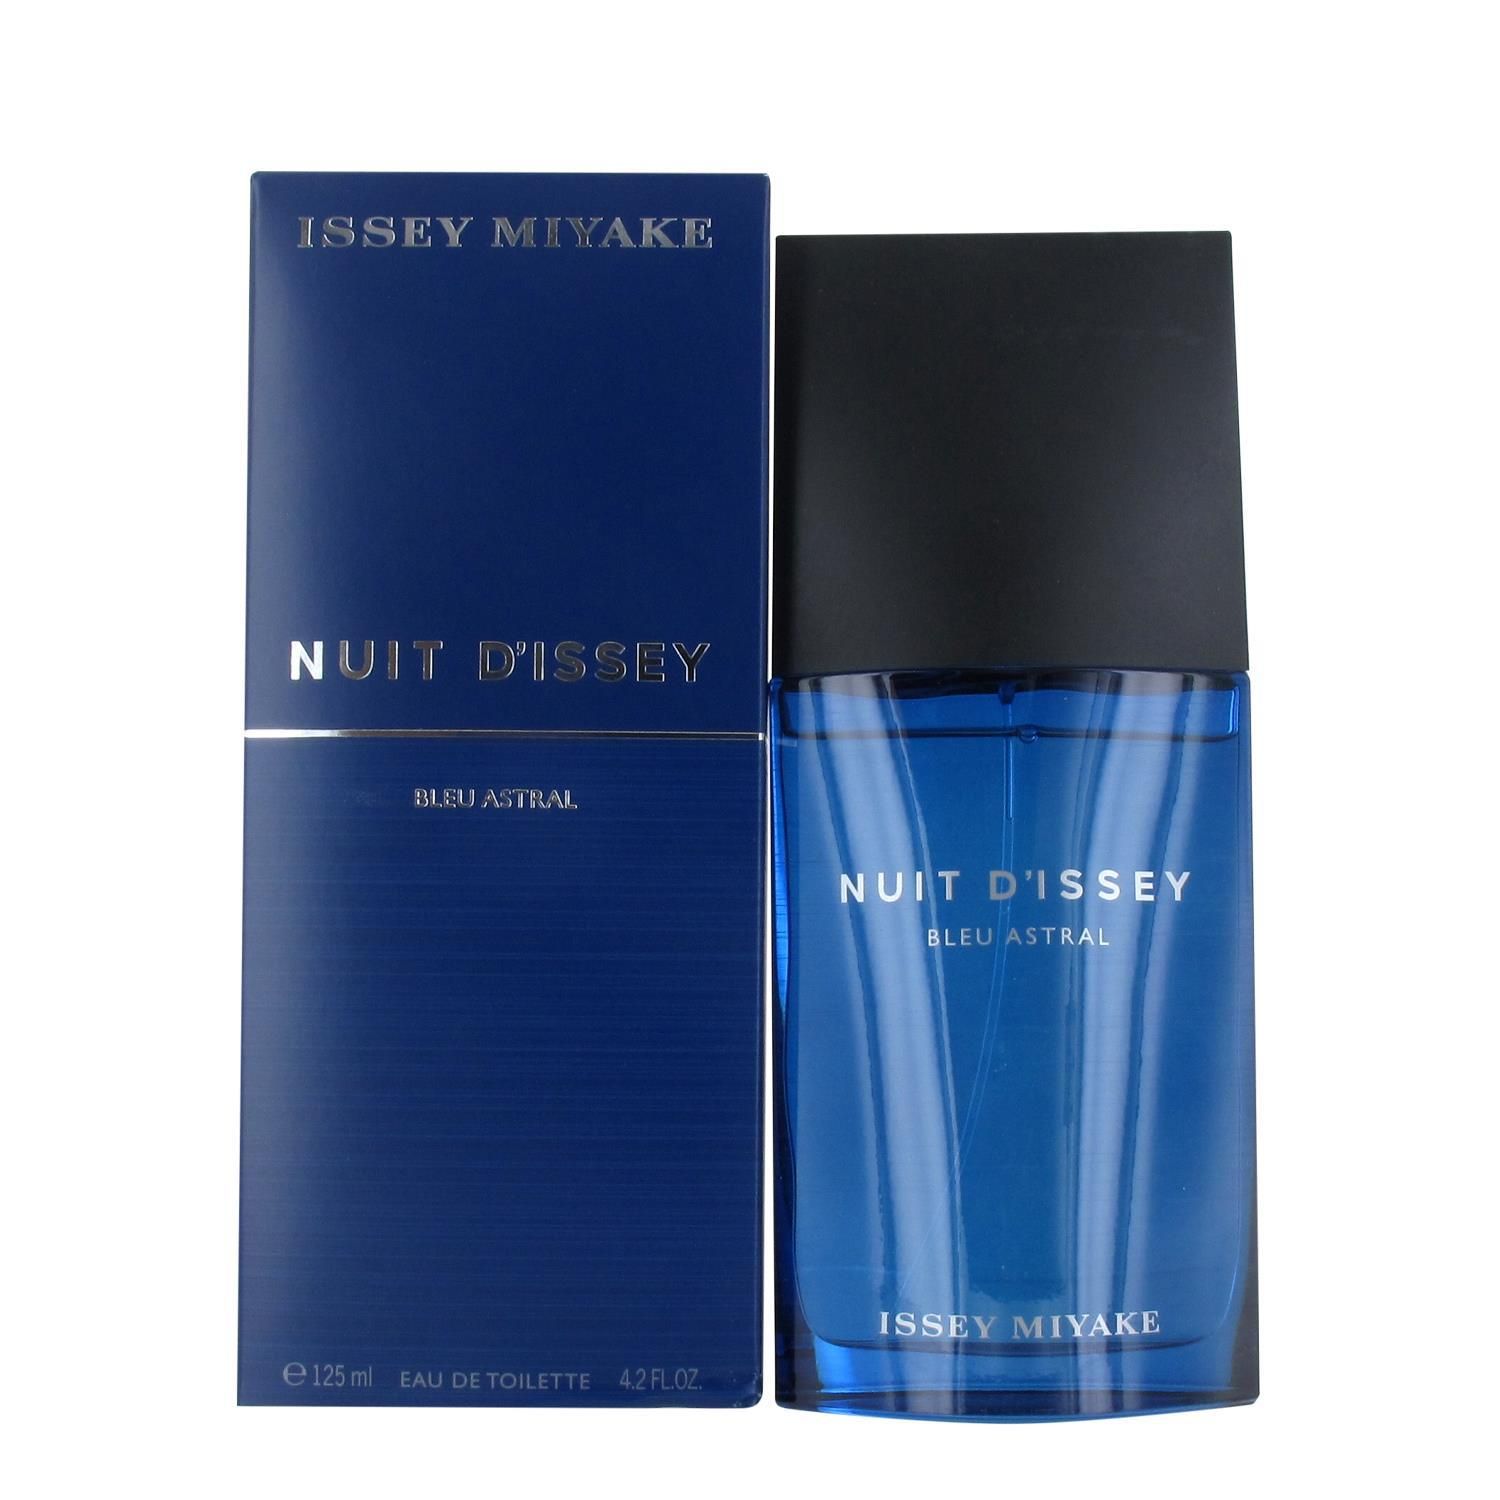 Issey Miyake Nuit D'Issey Bleu Astral 125ml Eau de Toilette Spray for Him